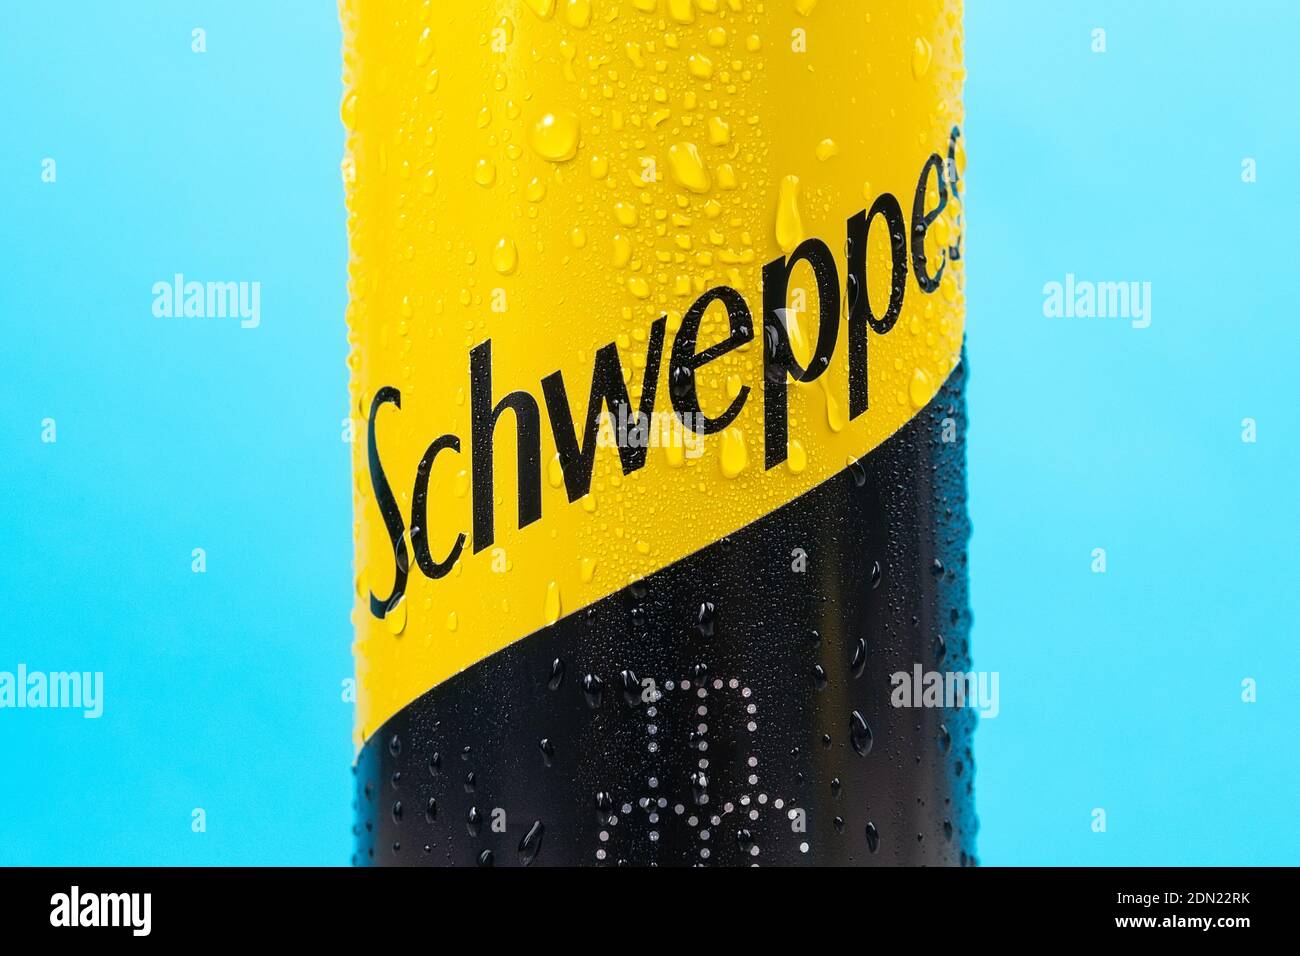 Schweppes White Peach 1 Liter – buy online now! Schweppes –German Sof, $  6,28